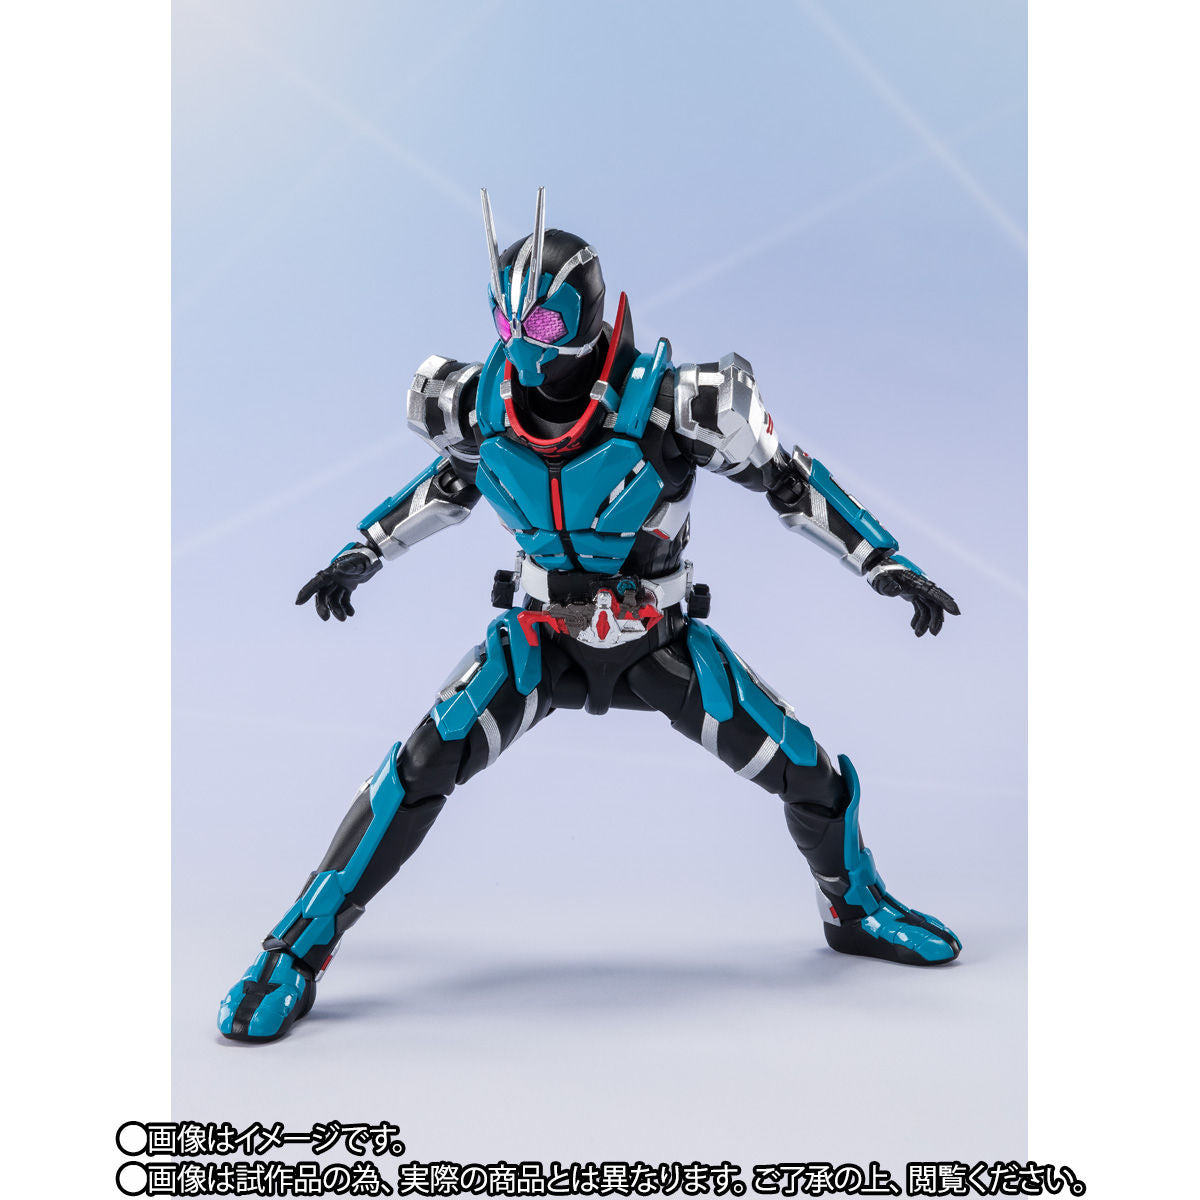 SH Figuarts Kamen Rider Ichigata Rocking Hopper